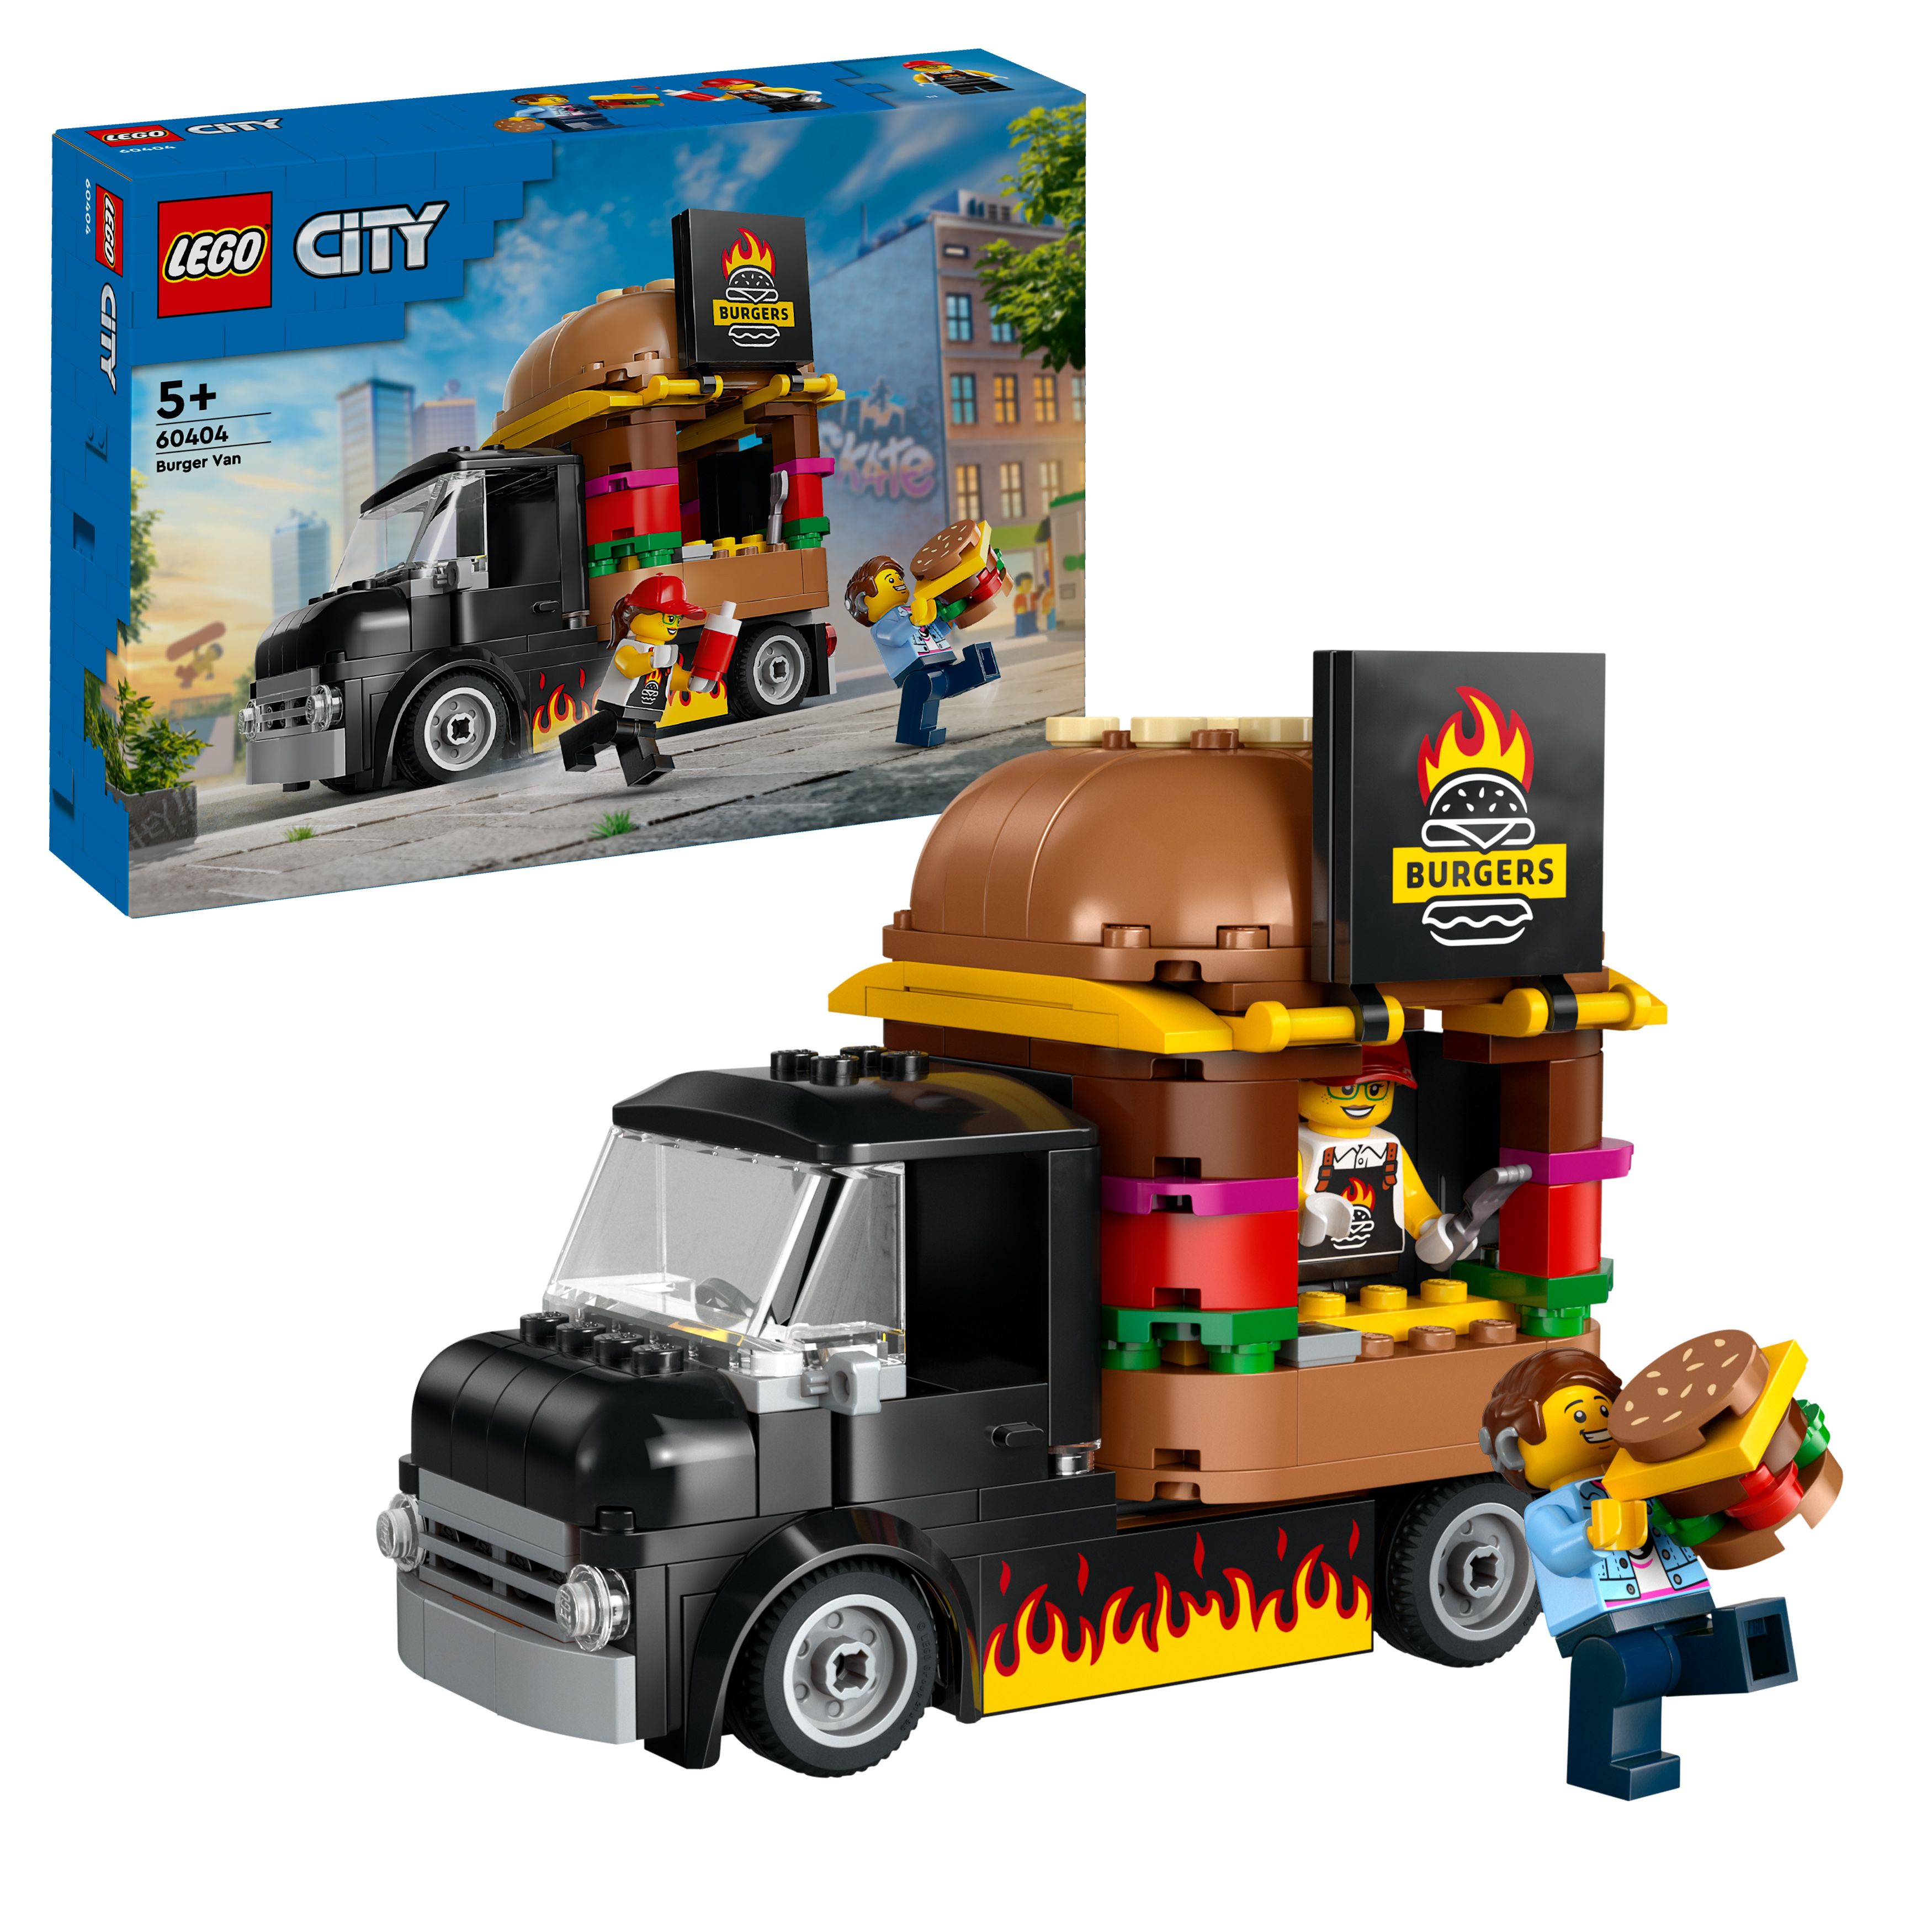 LEGO City - Burgertruck (60404)